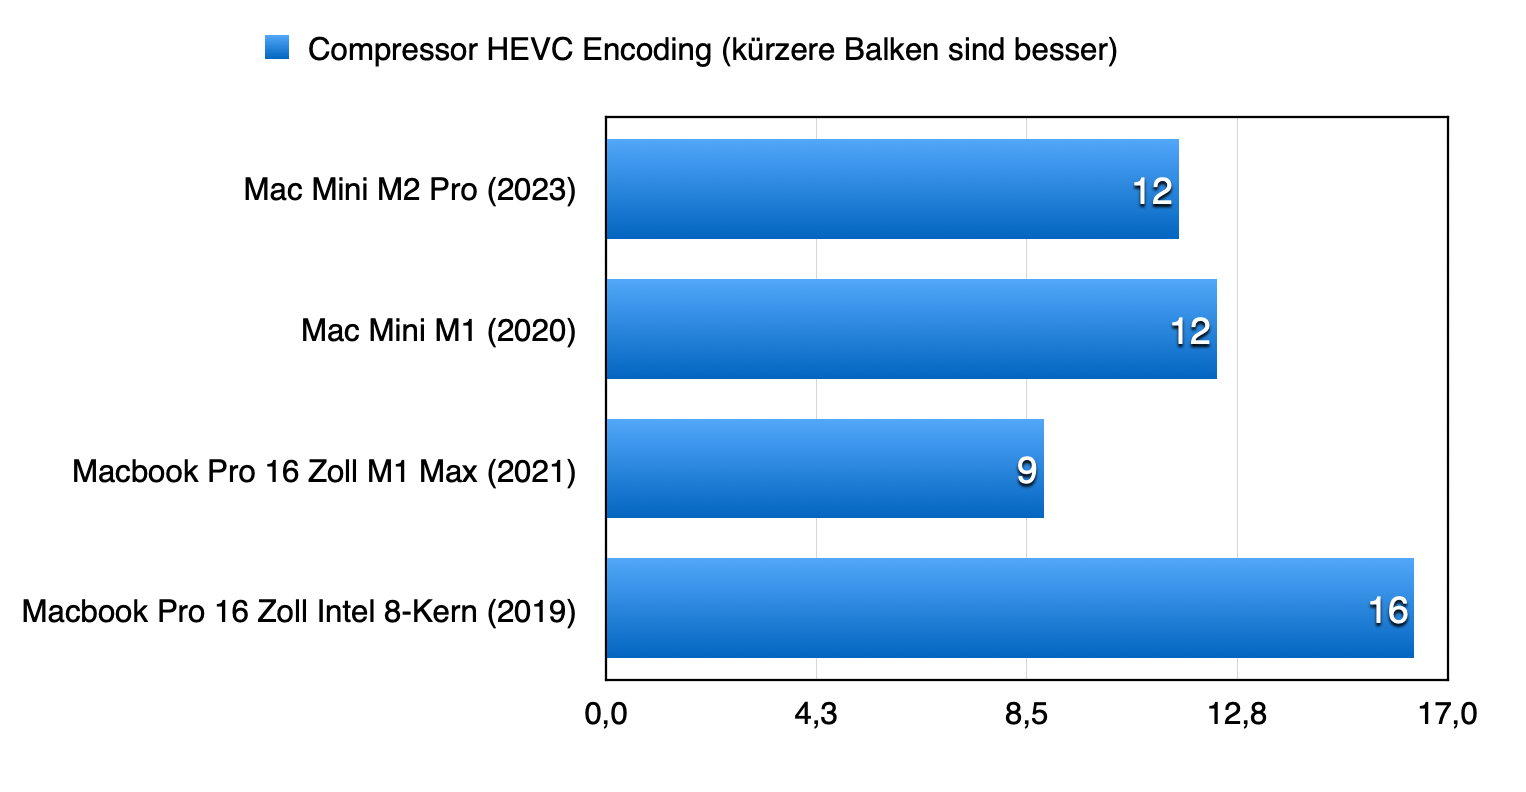 Compressor HEVC Encoding